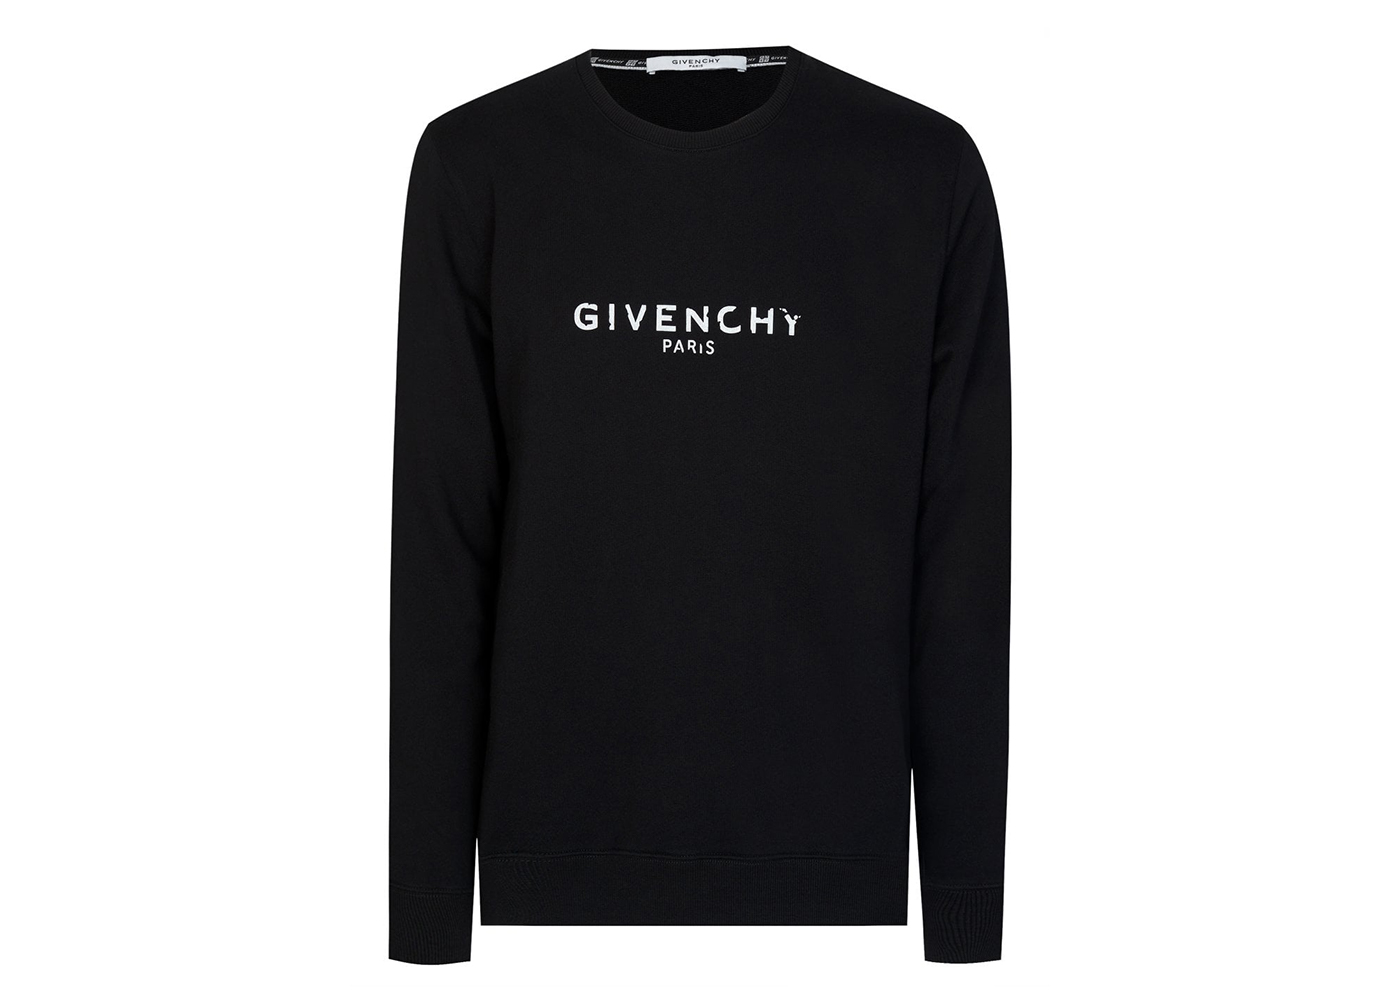 Givenchy Paris Logo Crewneck Black